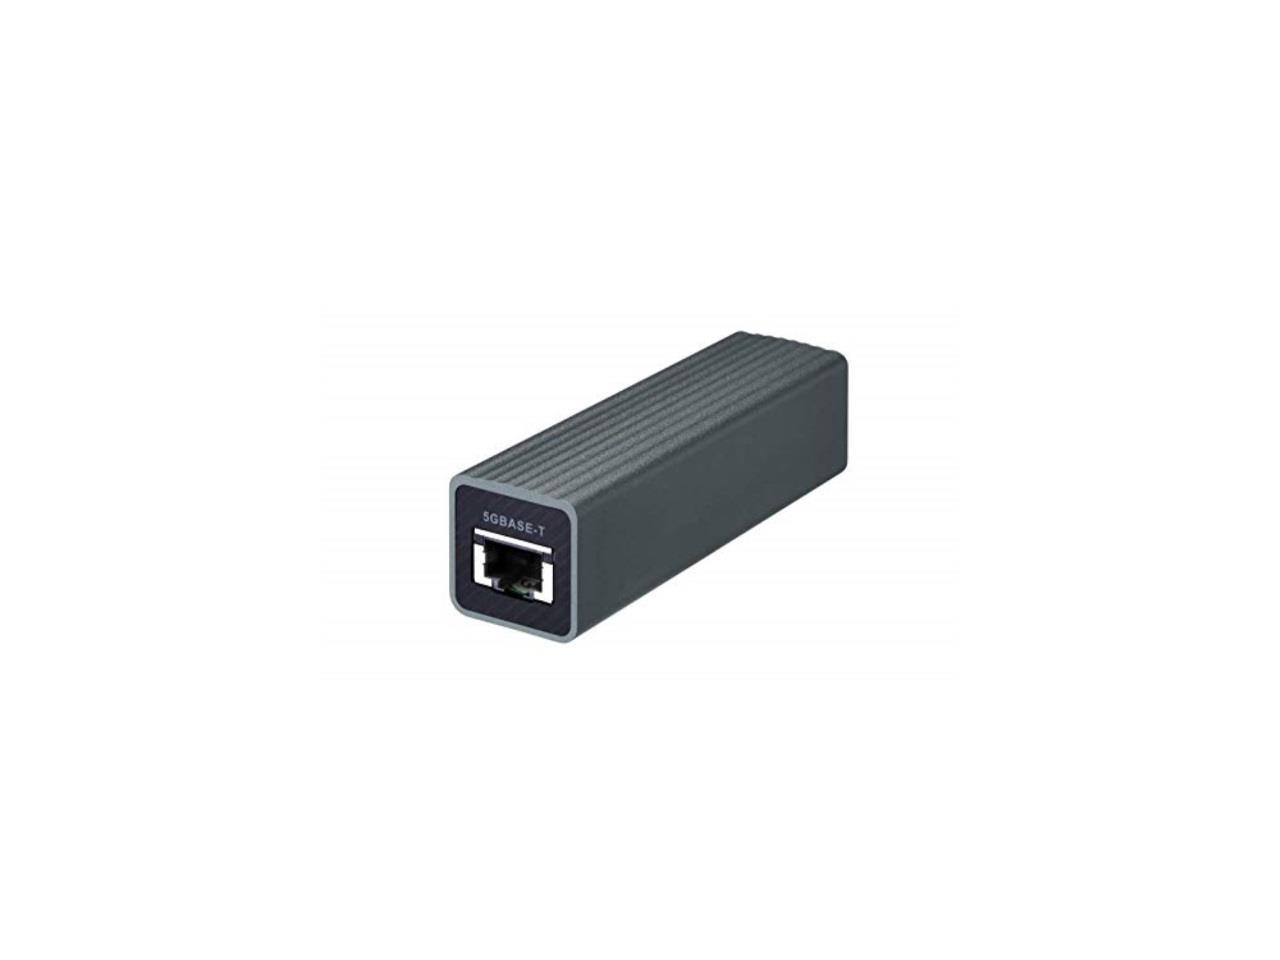 QNAP QNA-UC5G1T USB 3.0 to Single Port RJ45 5 GbE / 2.5 GbE / 1 GbE / 100MB Adapter, Bus Powered